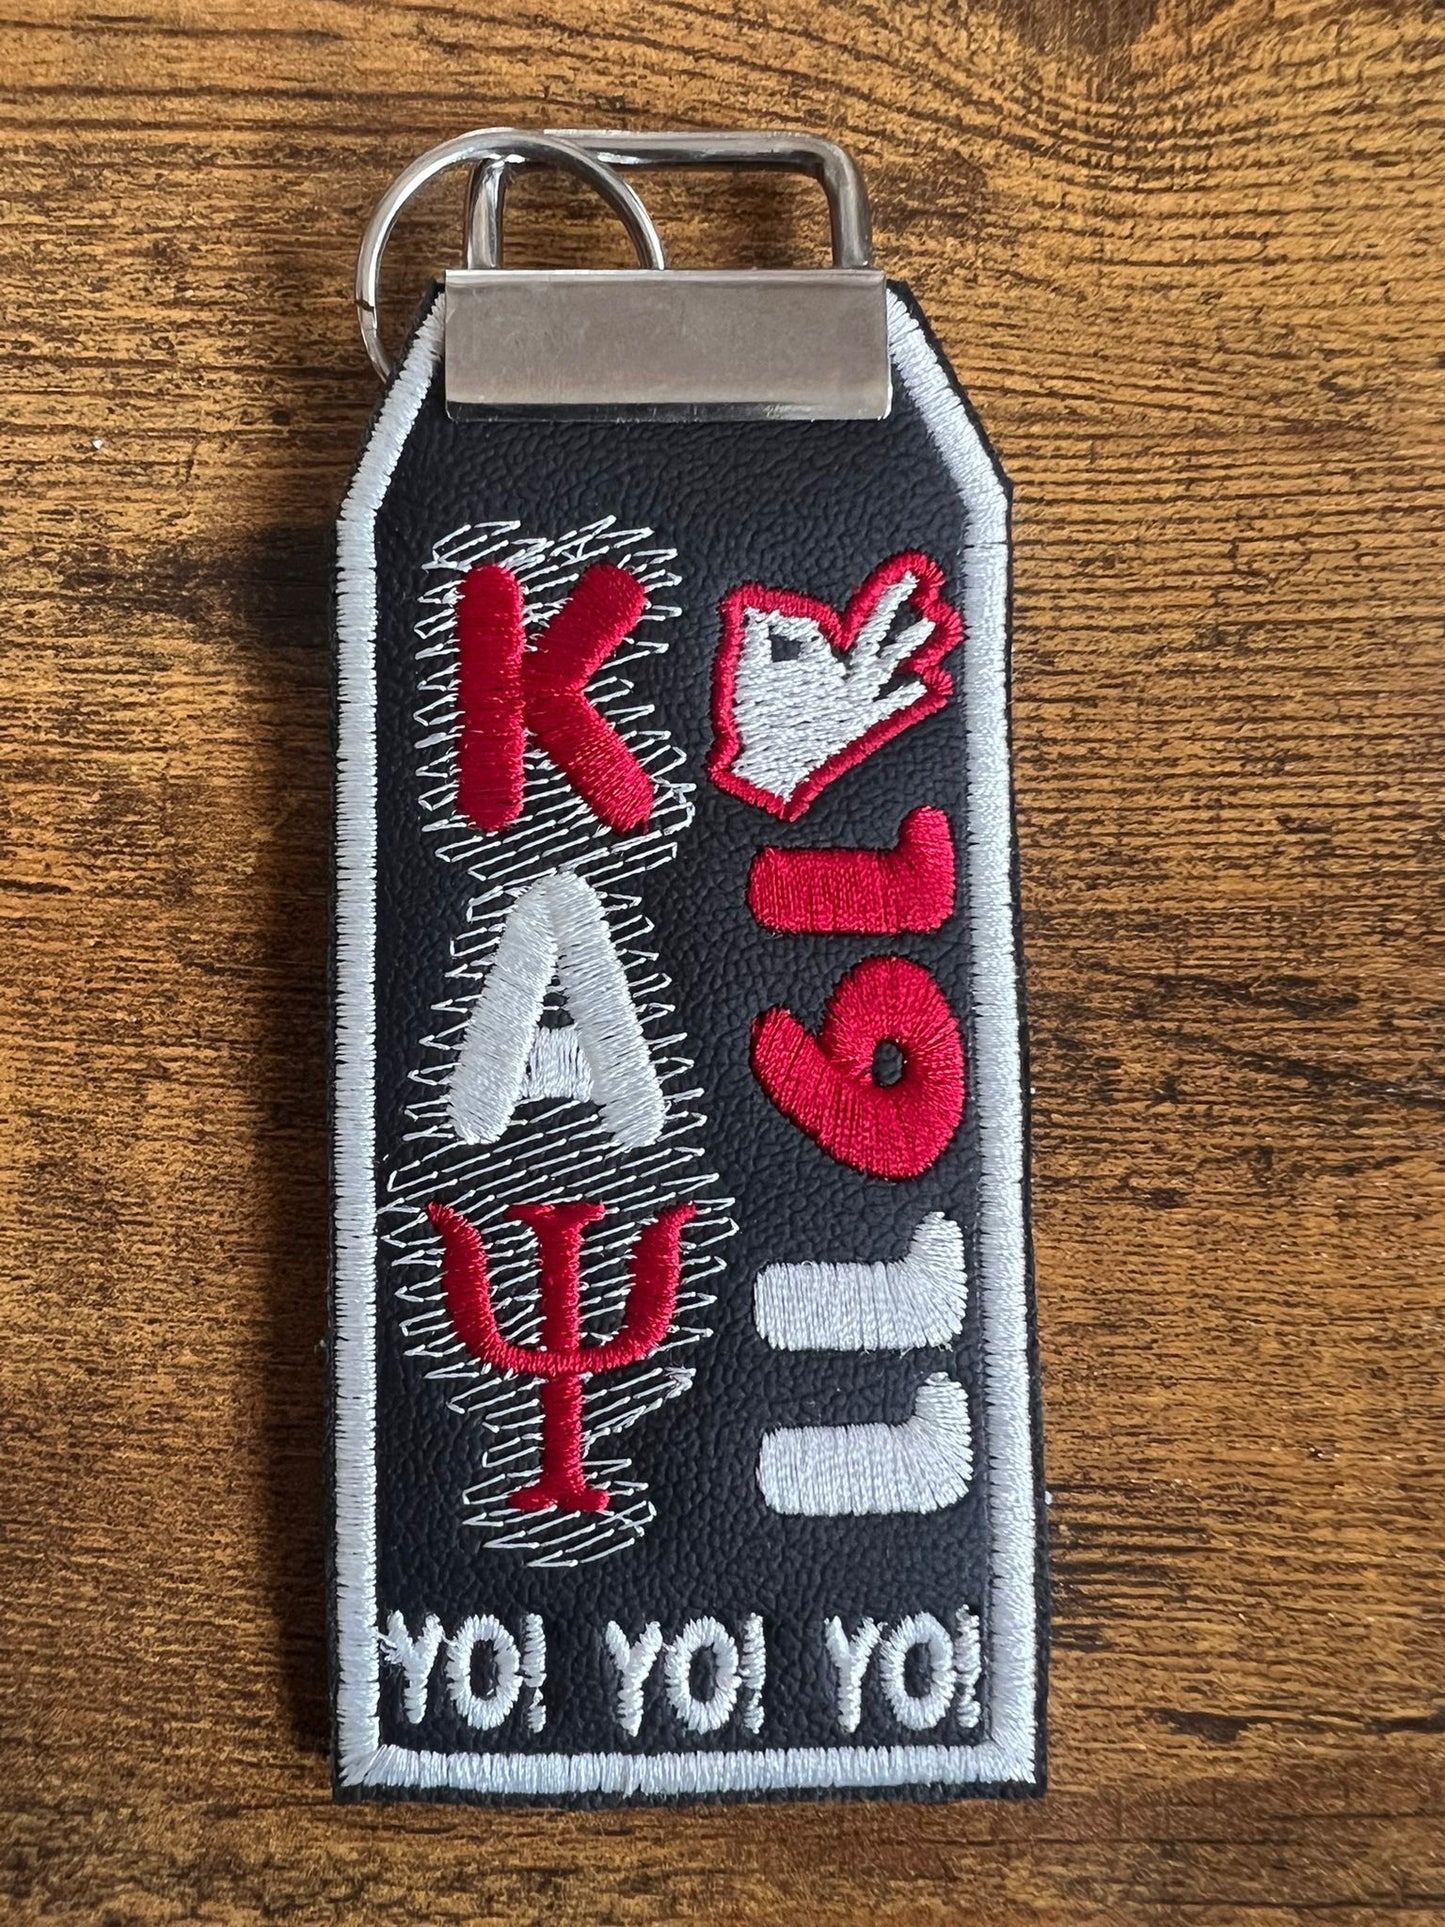 Kappa Alpha Psi Bag Tag (White Border)/KeyRing Clearance